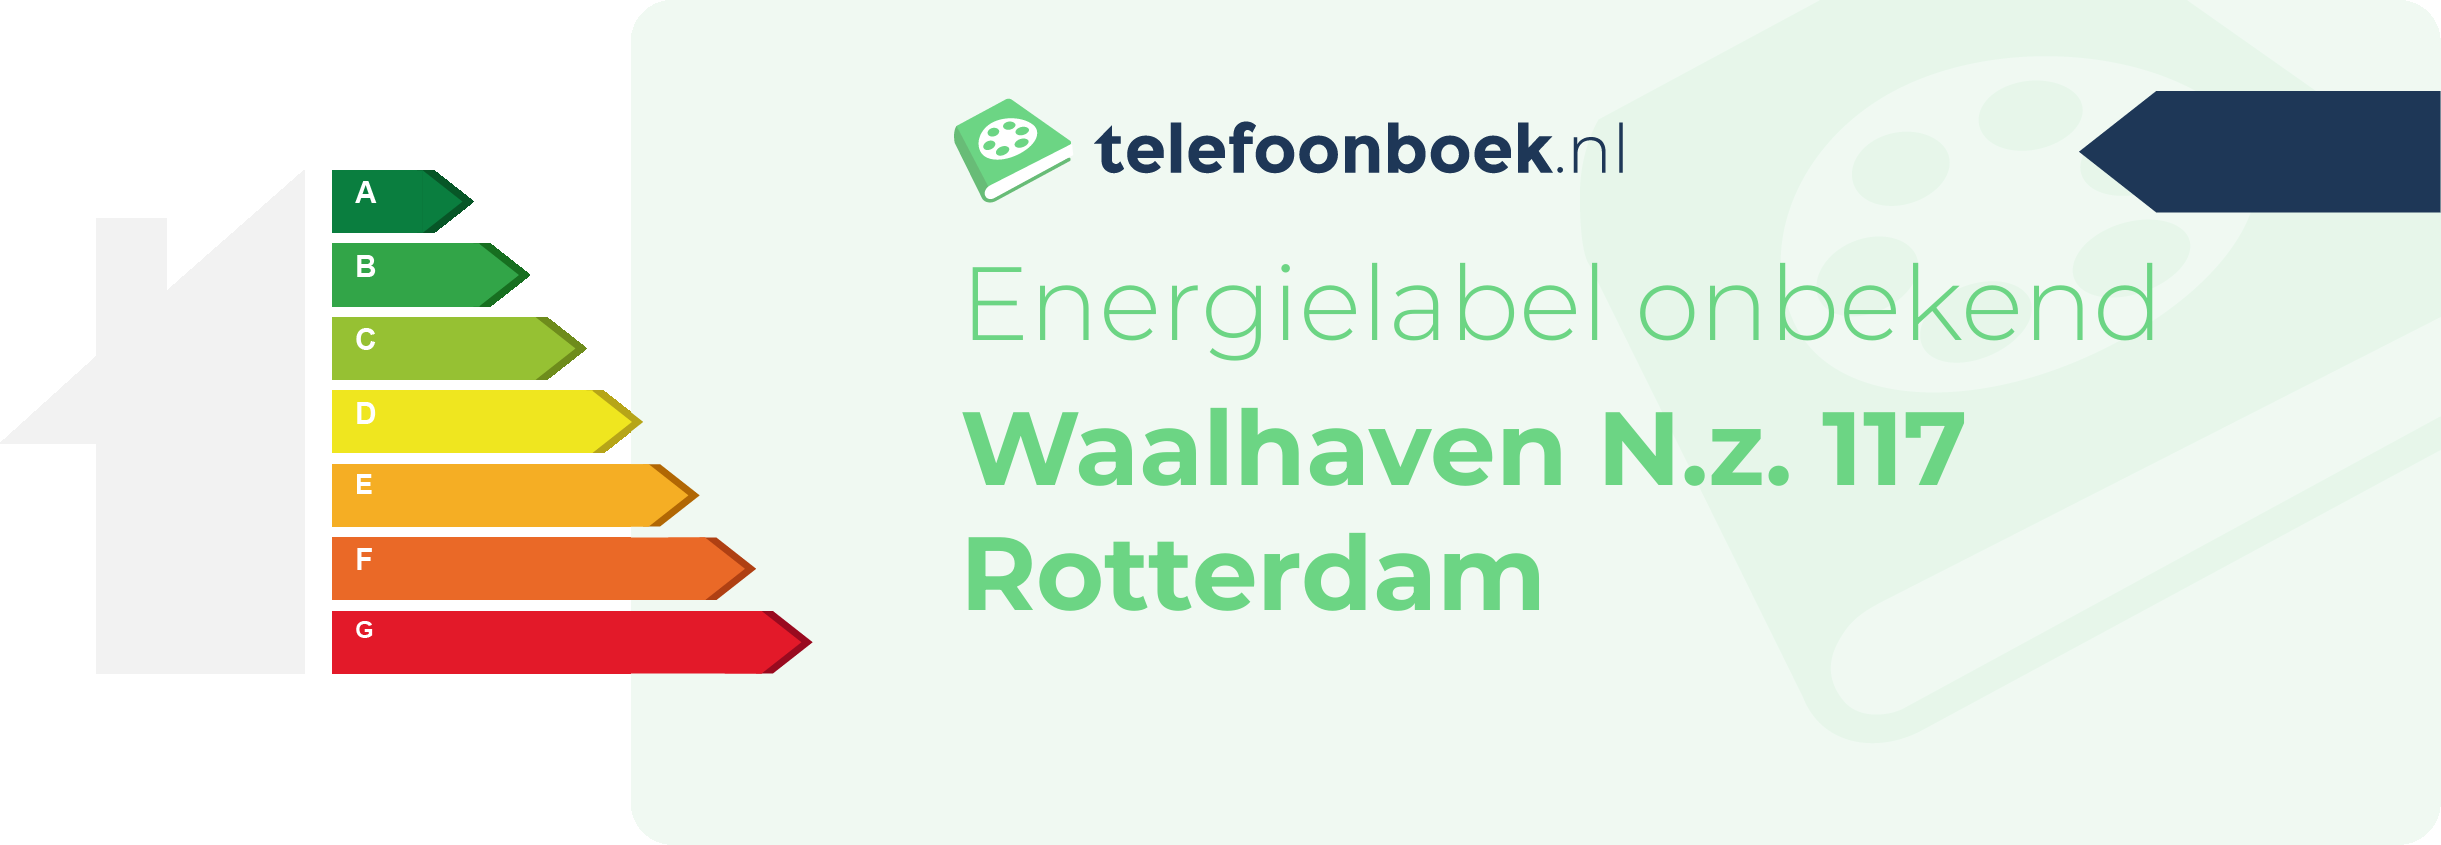 Energielabel Waalhaven N.z. 117 Rotterdam